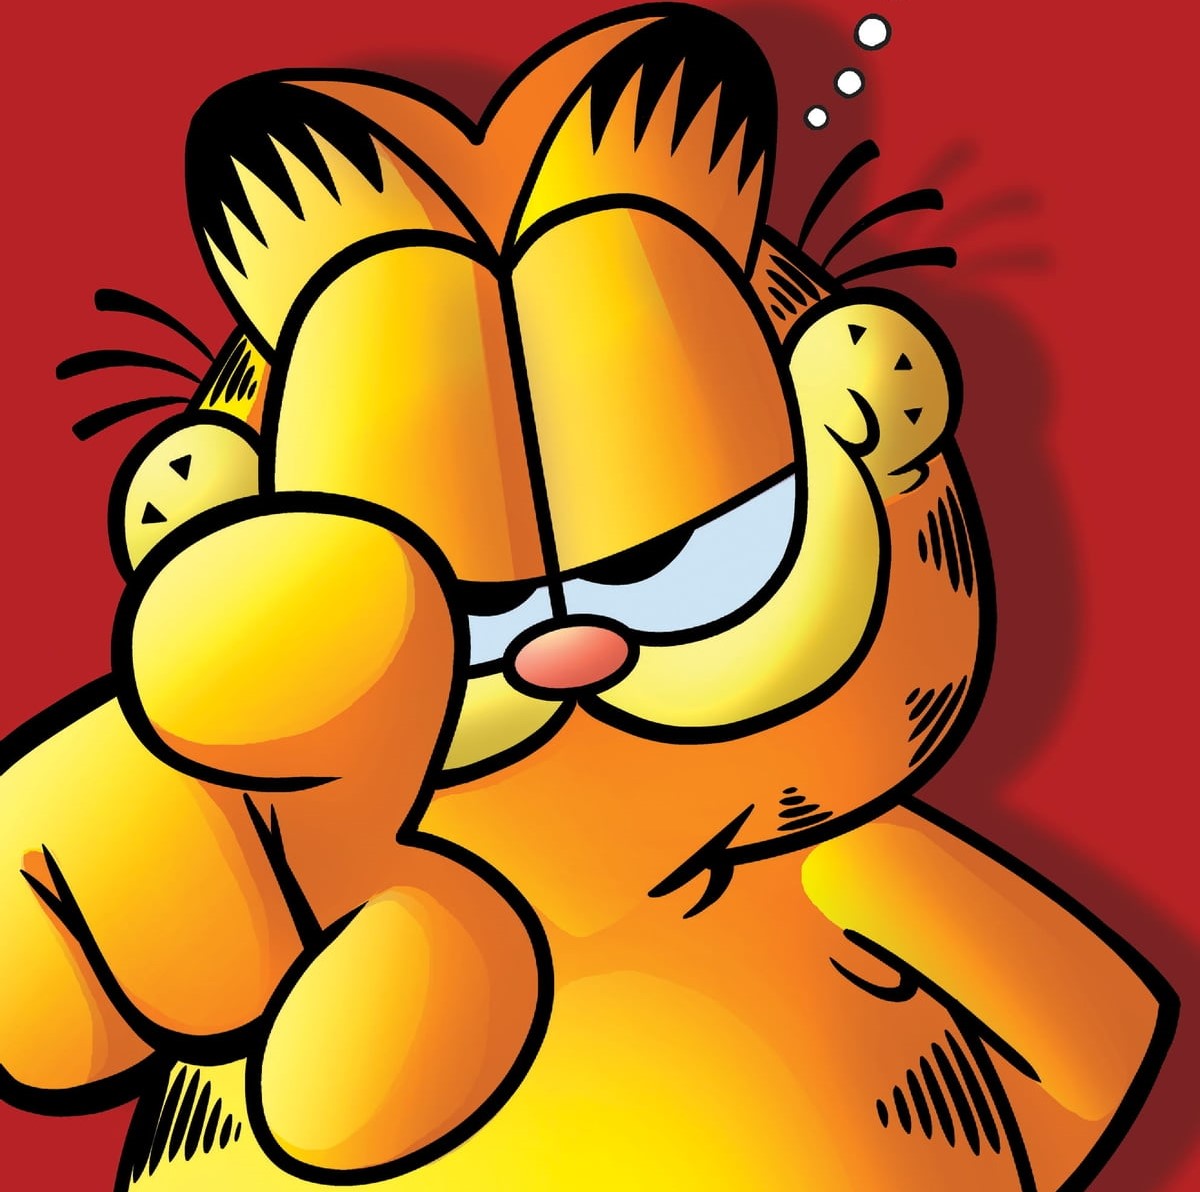 16 Facts About Garfield (Garfield) - Facts.net